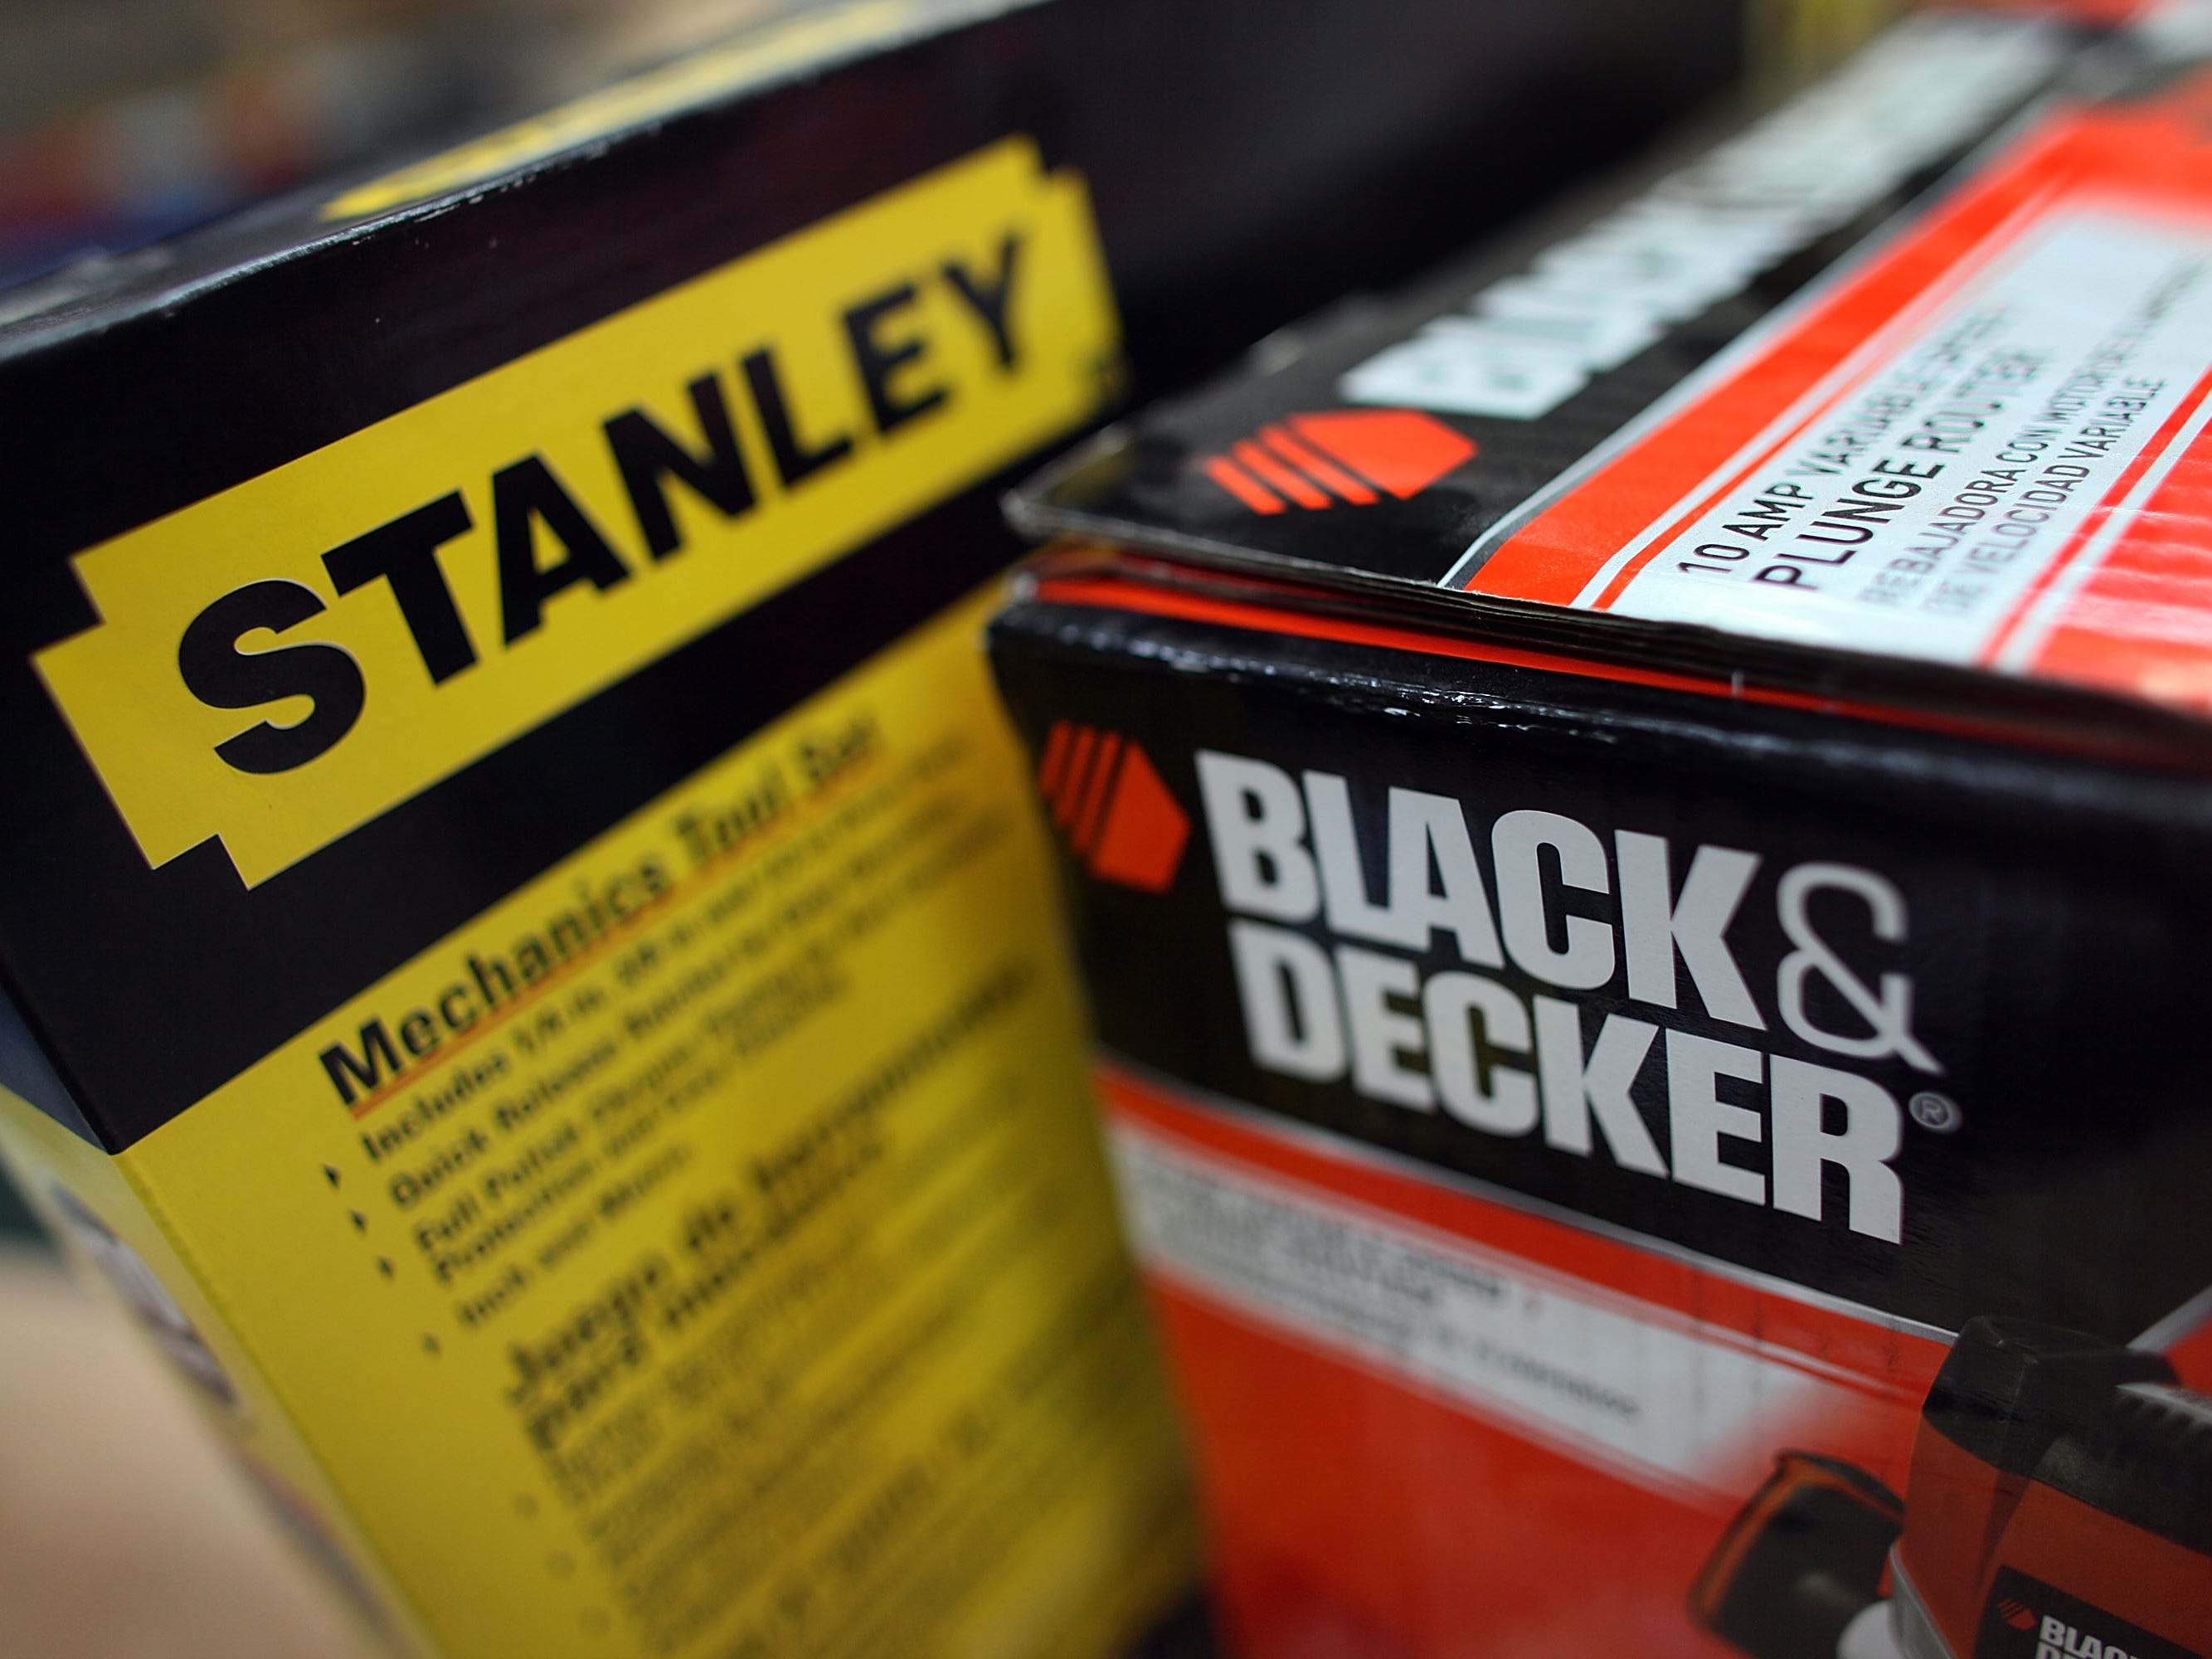 Stanley Black & Decker Finalizes Acquisition of Excel Industries